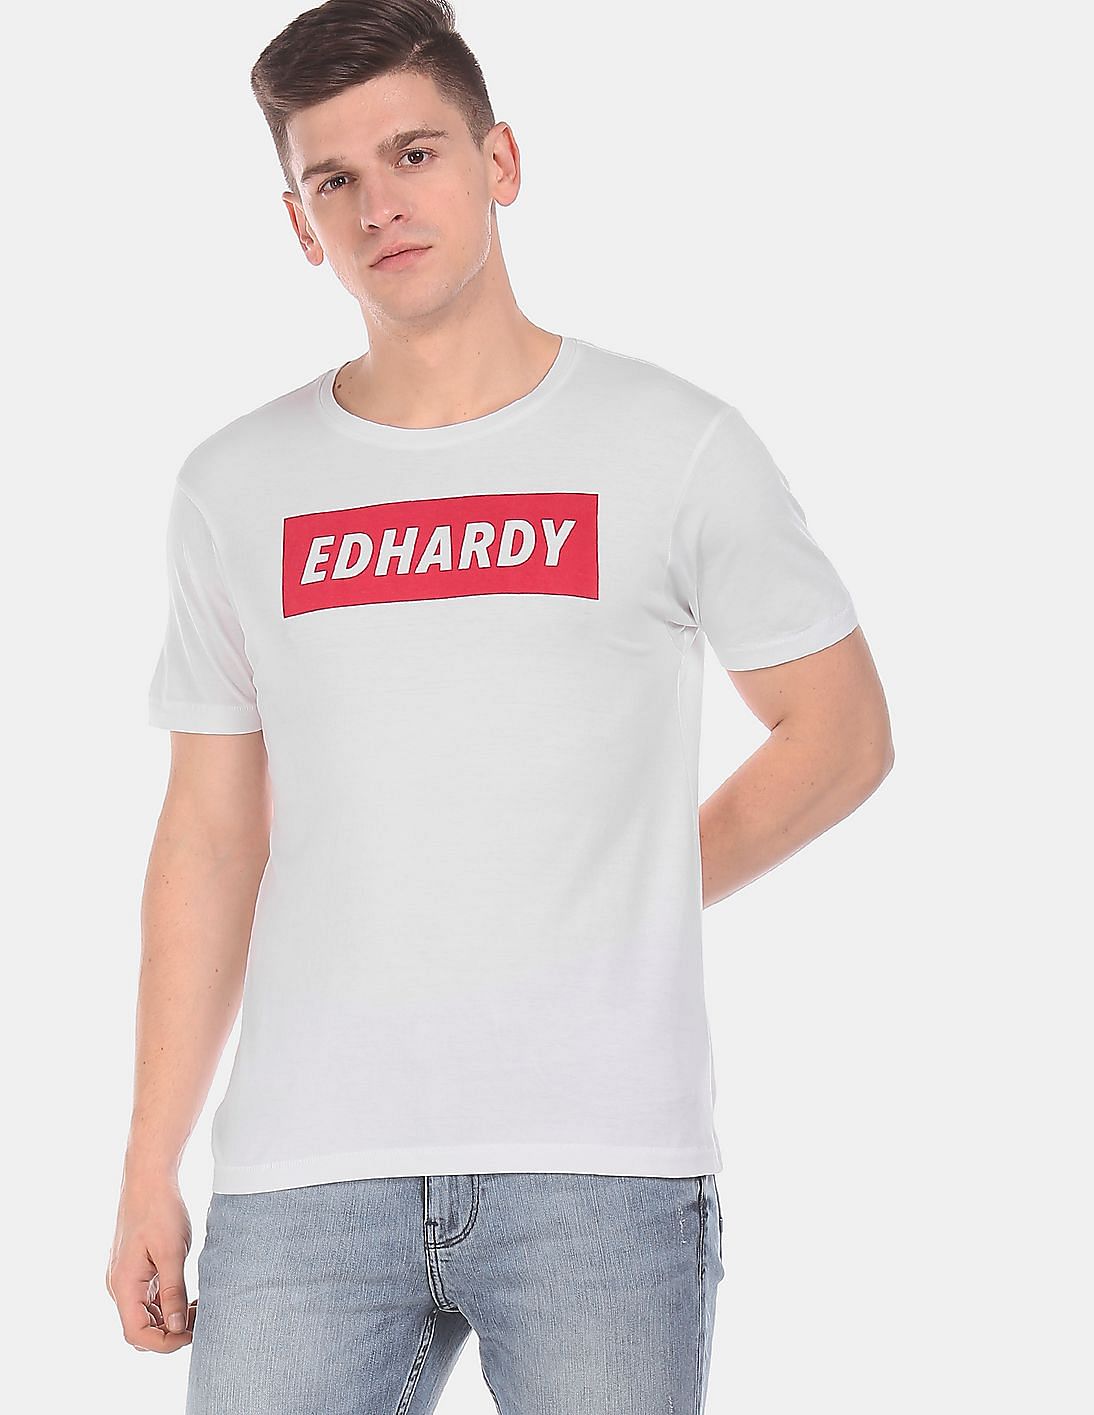 ed hardy t shirt mens